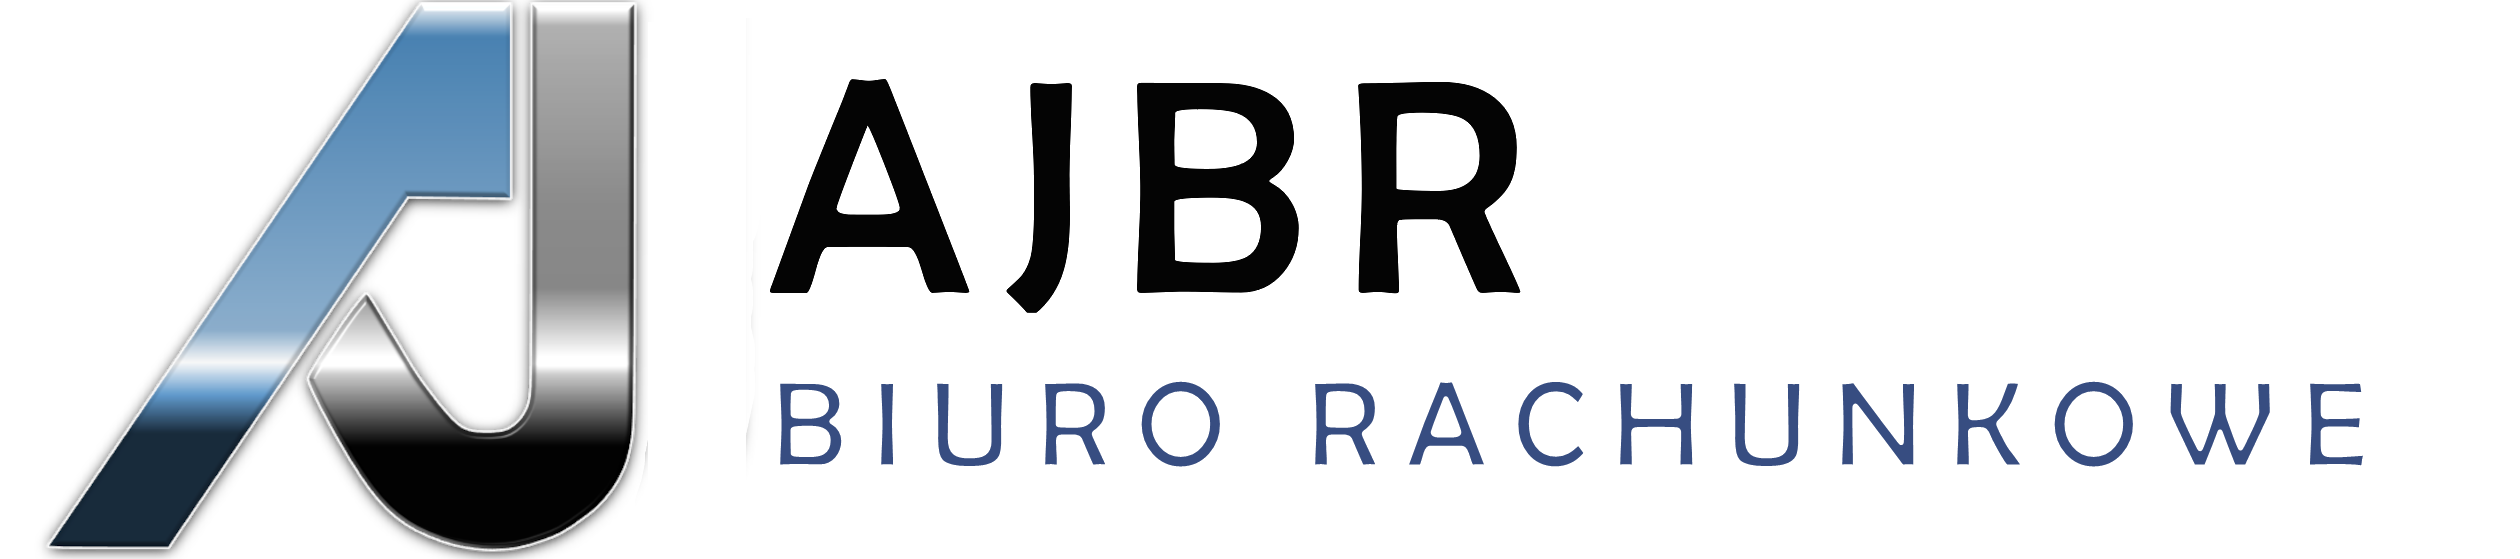 AJBR logo